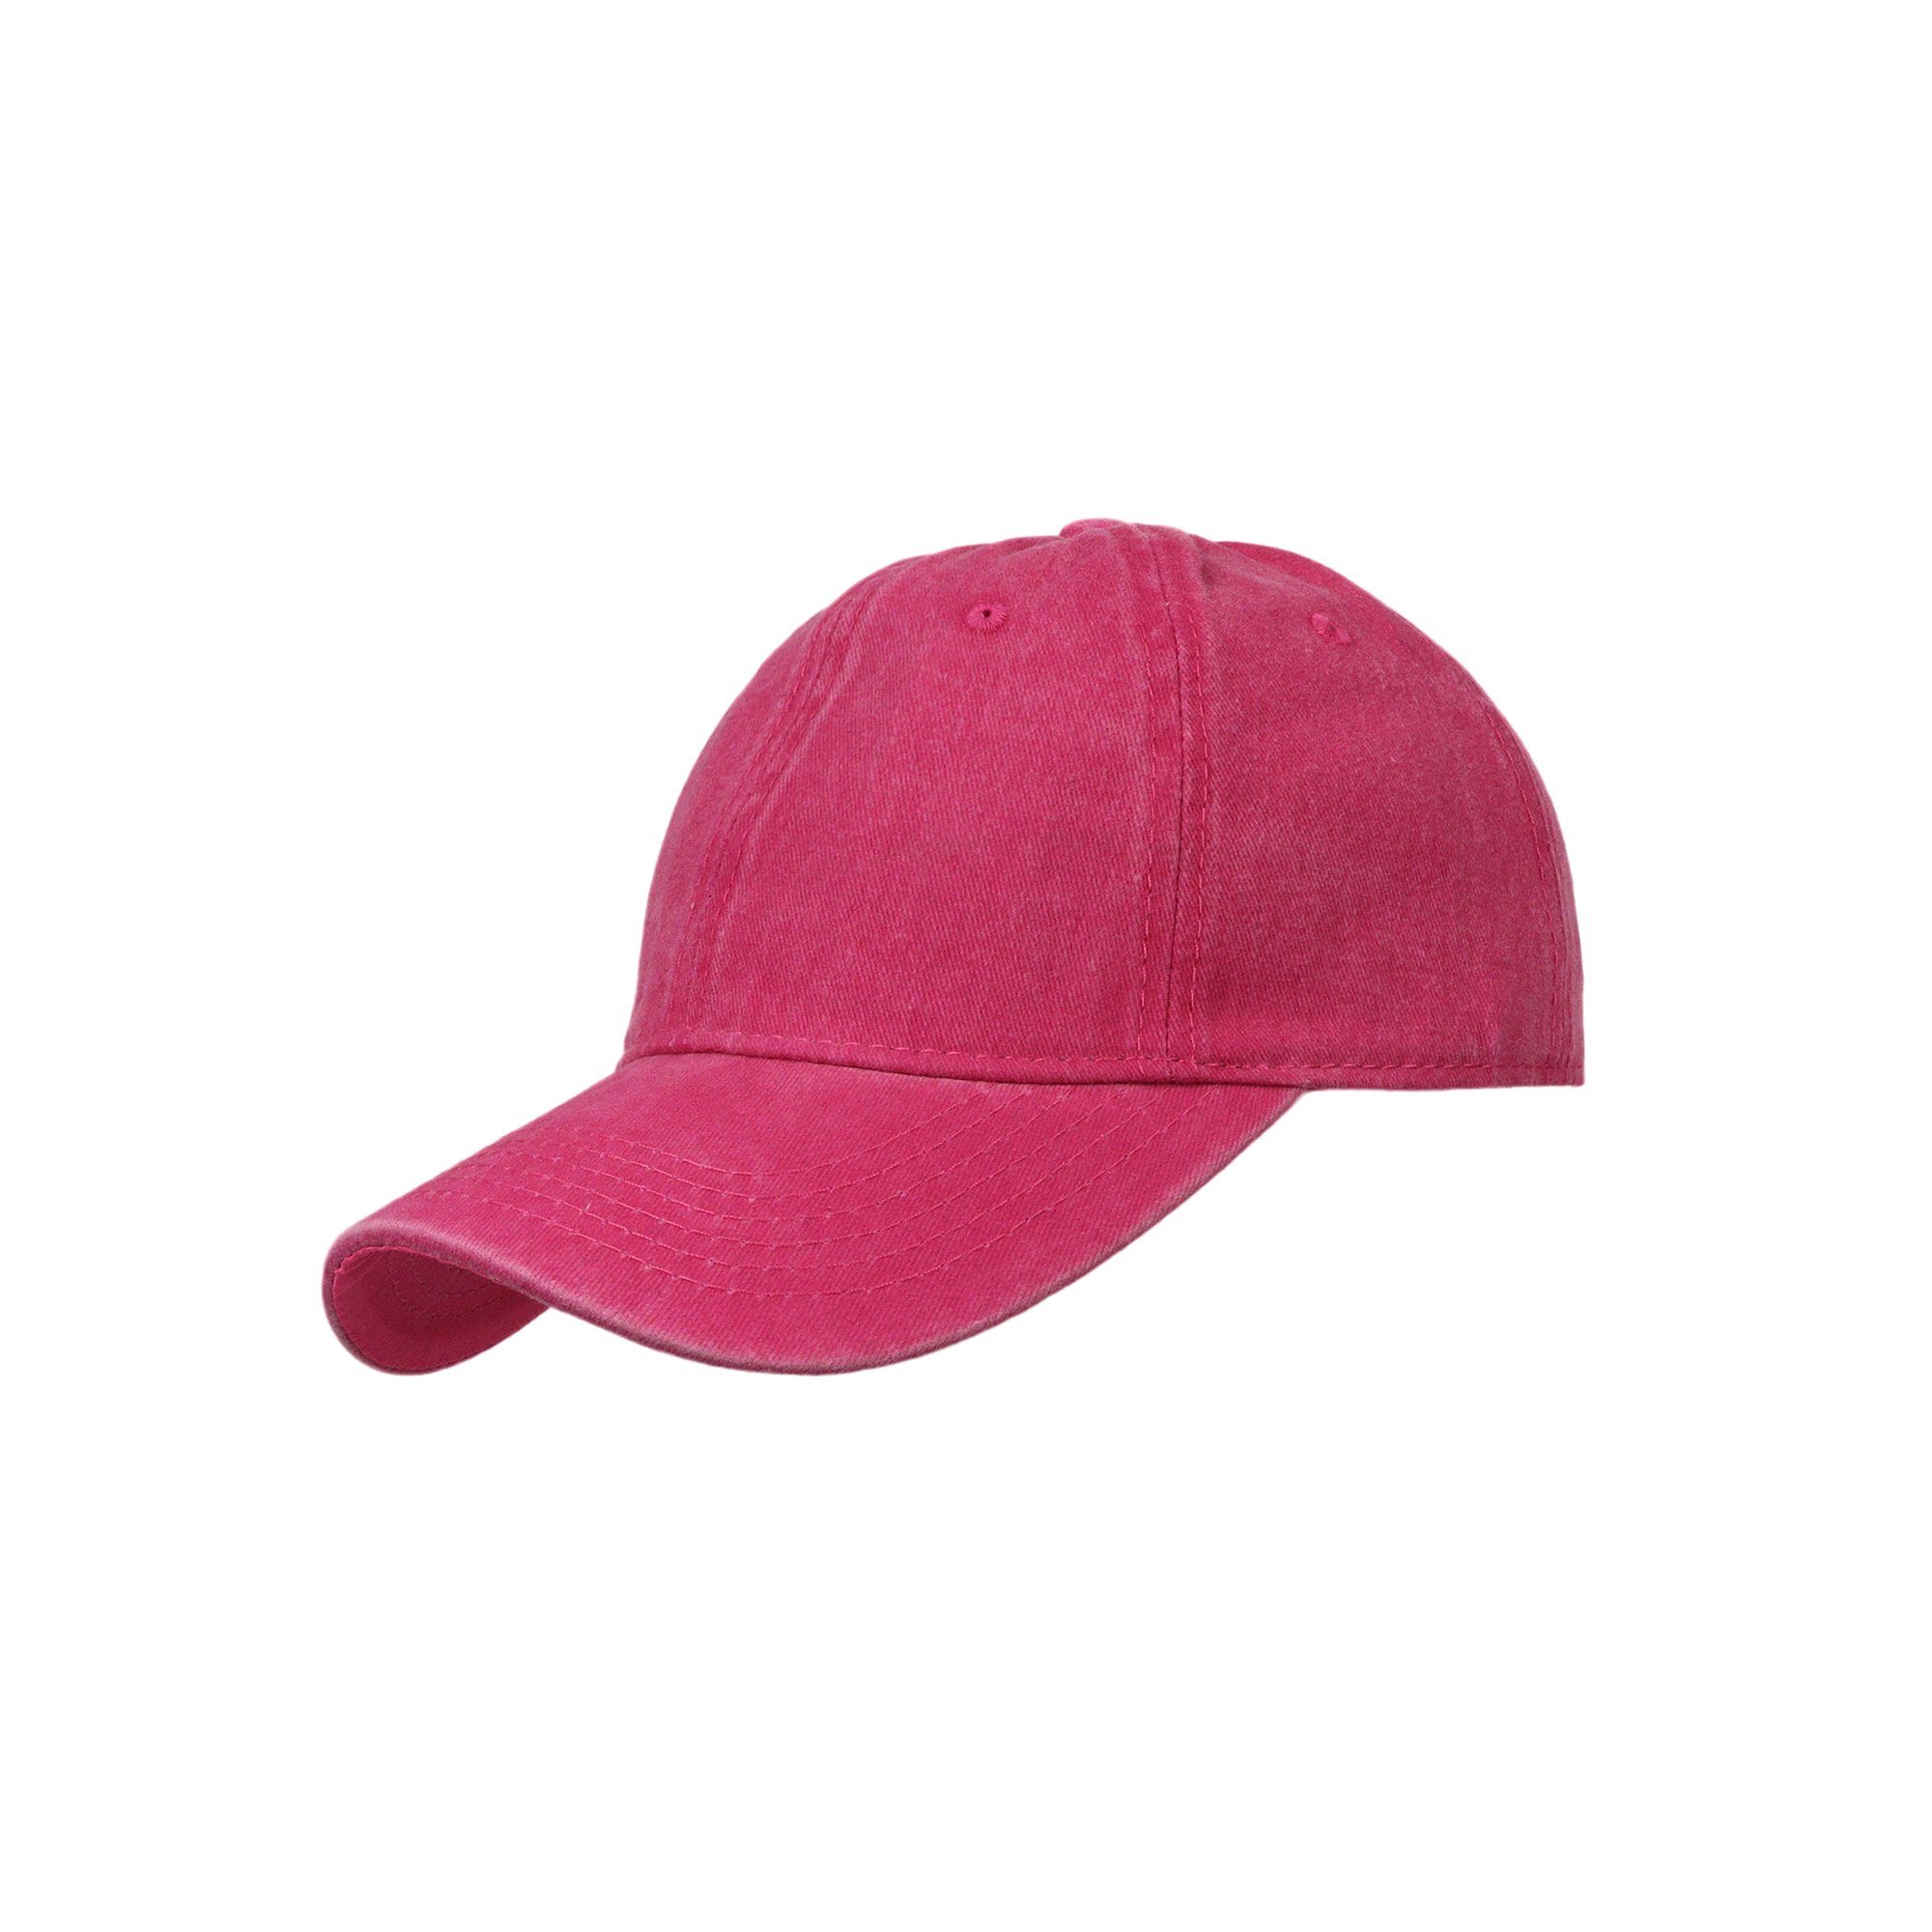 ZEBRO Baseball Cap Base Cap mit Belüftungslöcher pink